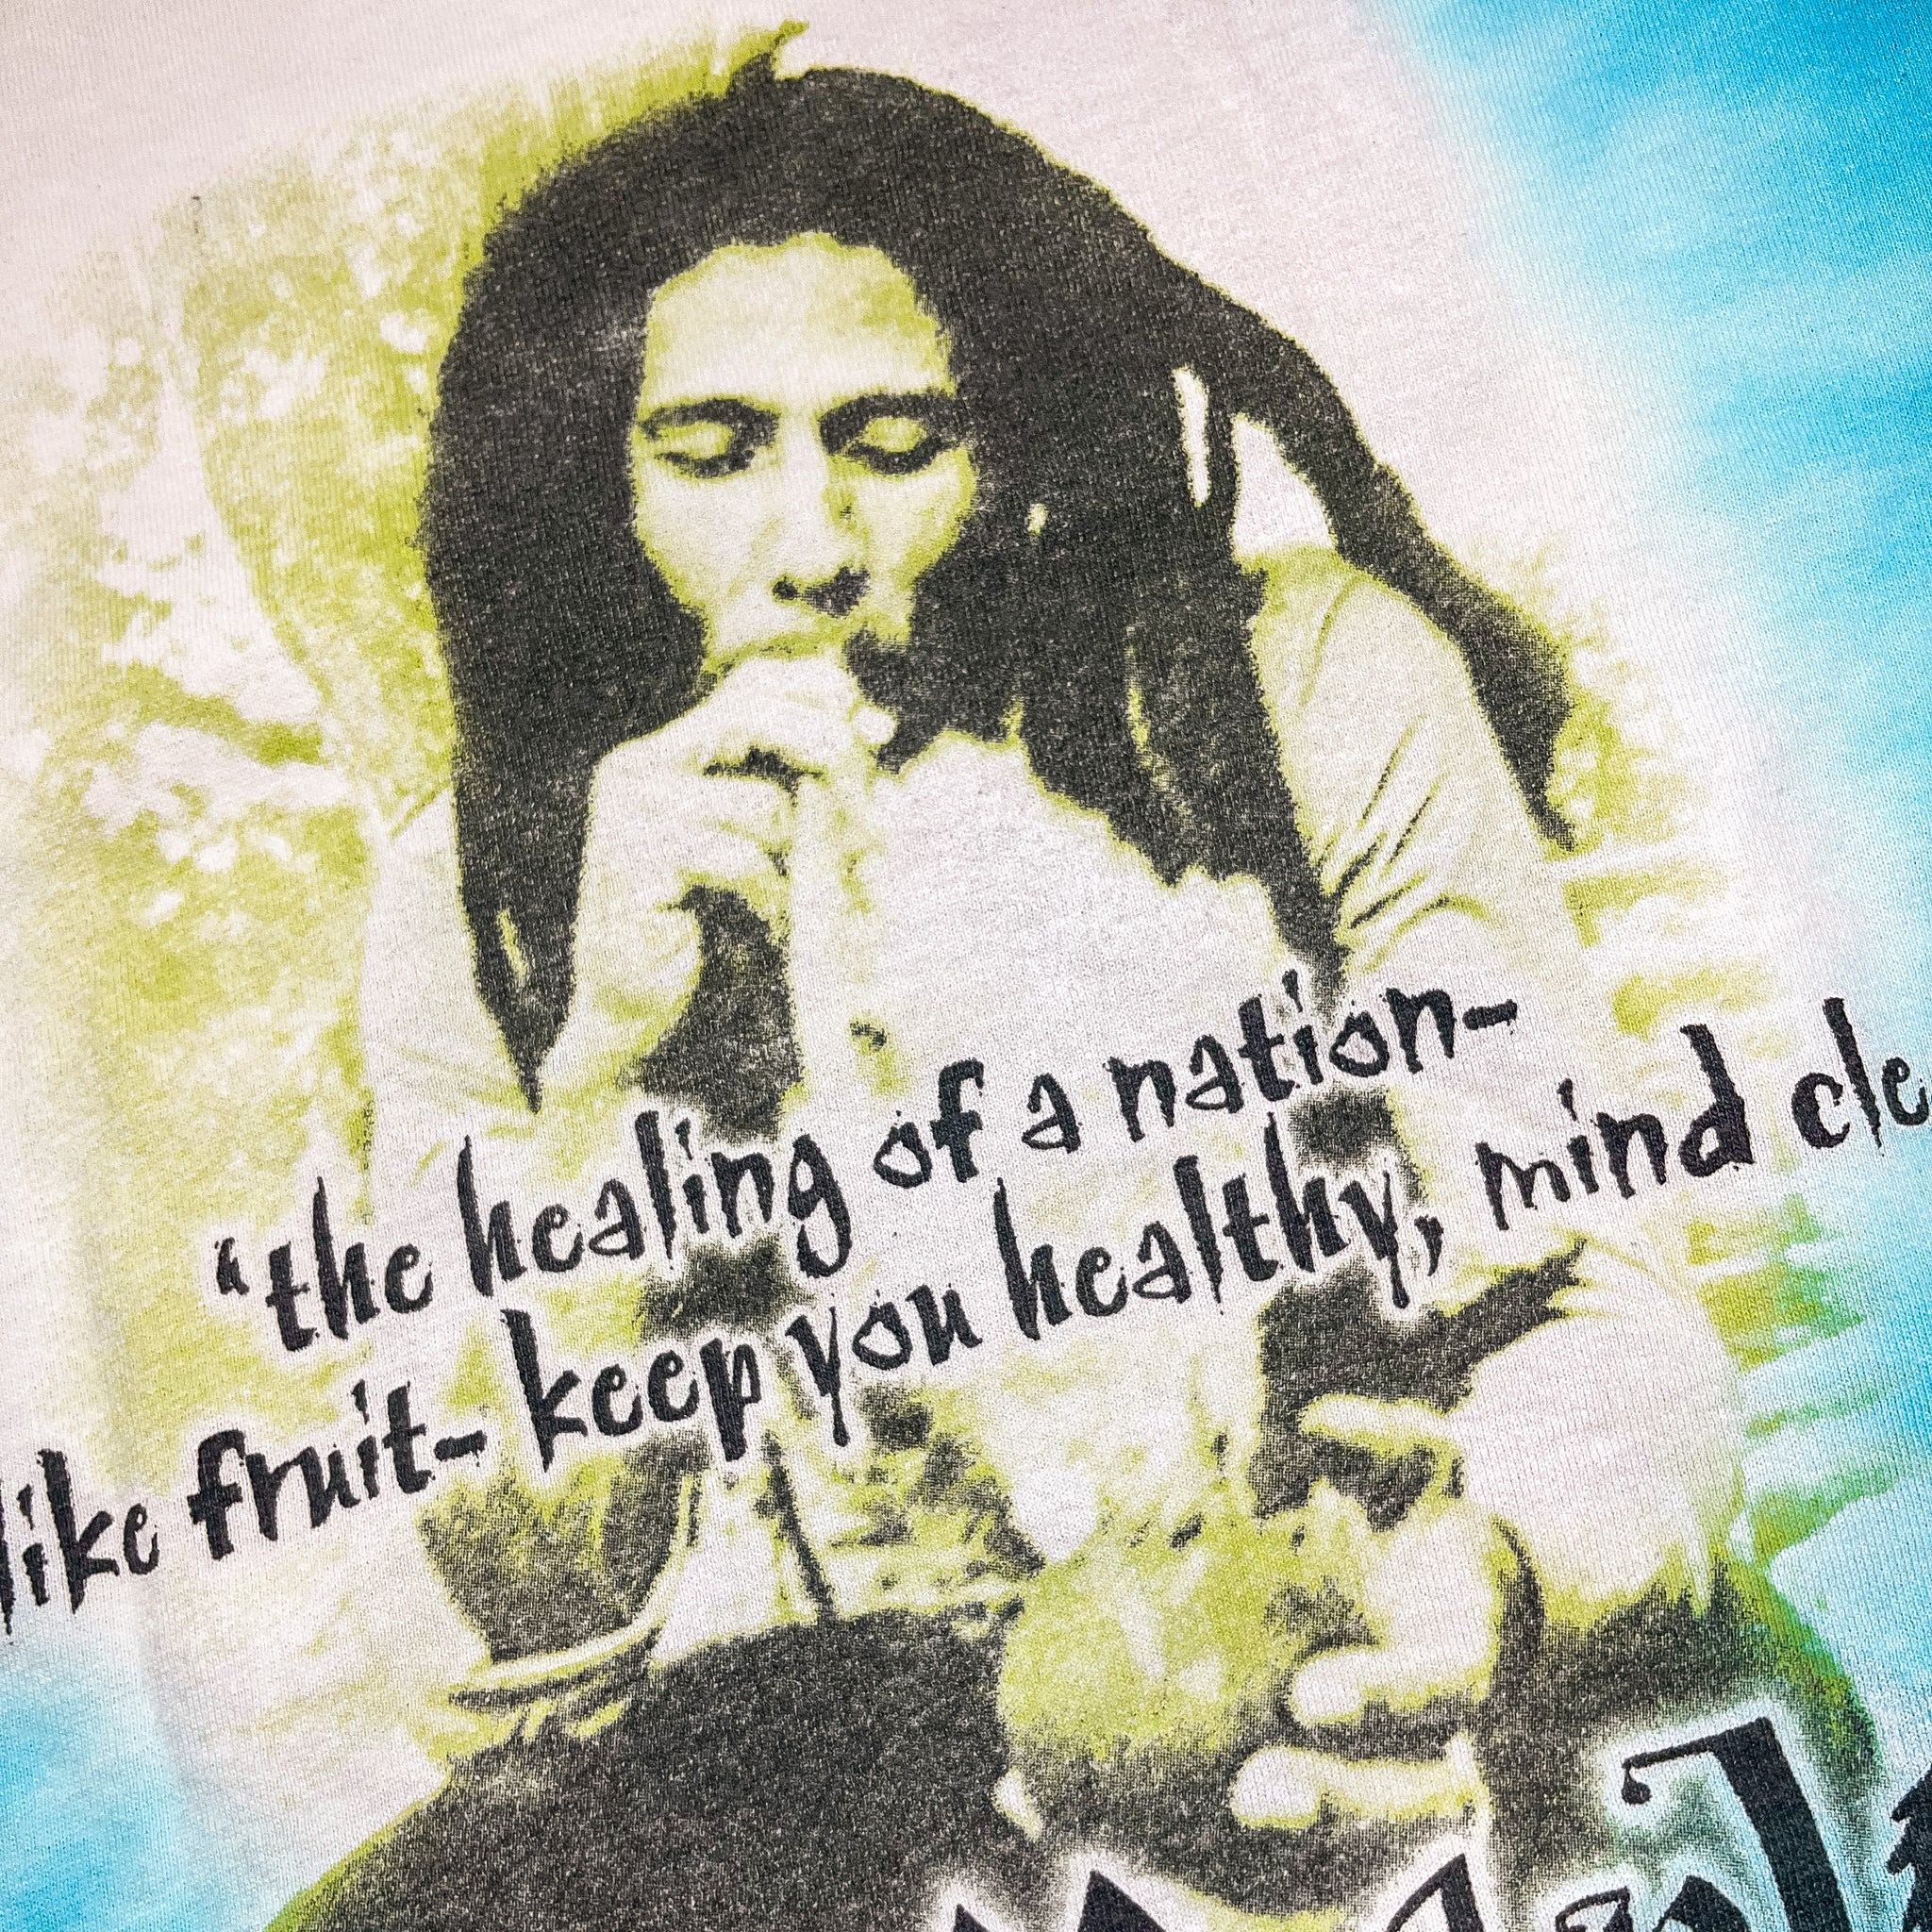 Bob Marley x Zion Tee - Tie Dye Herb